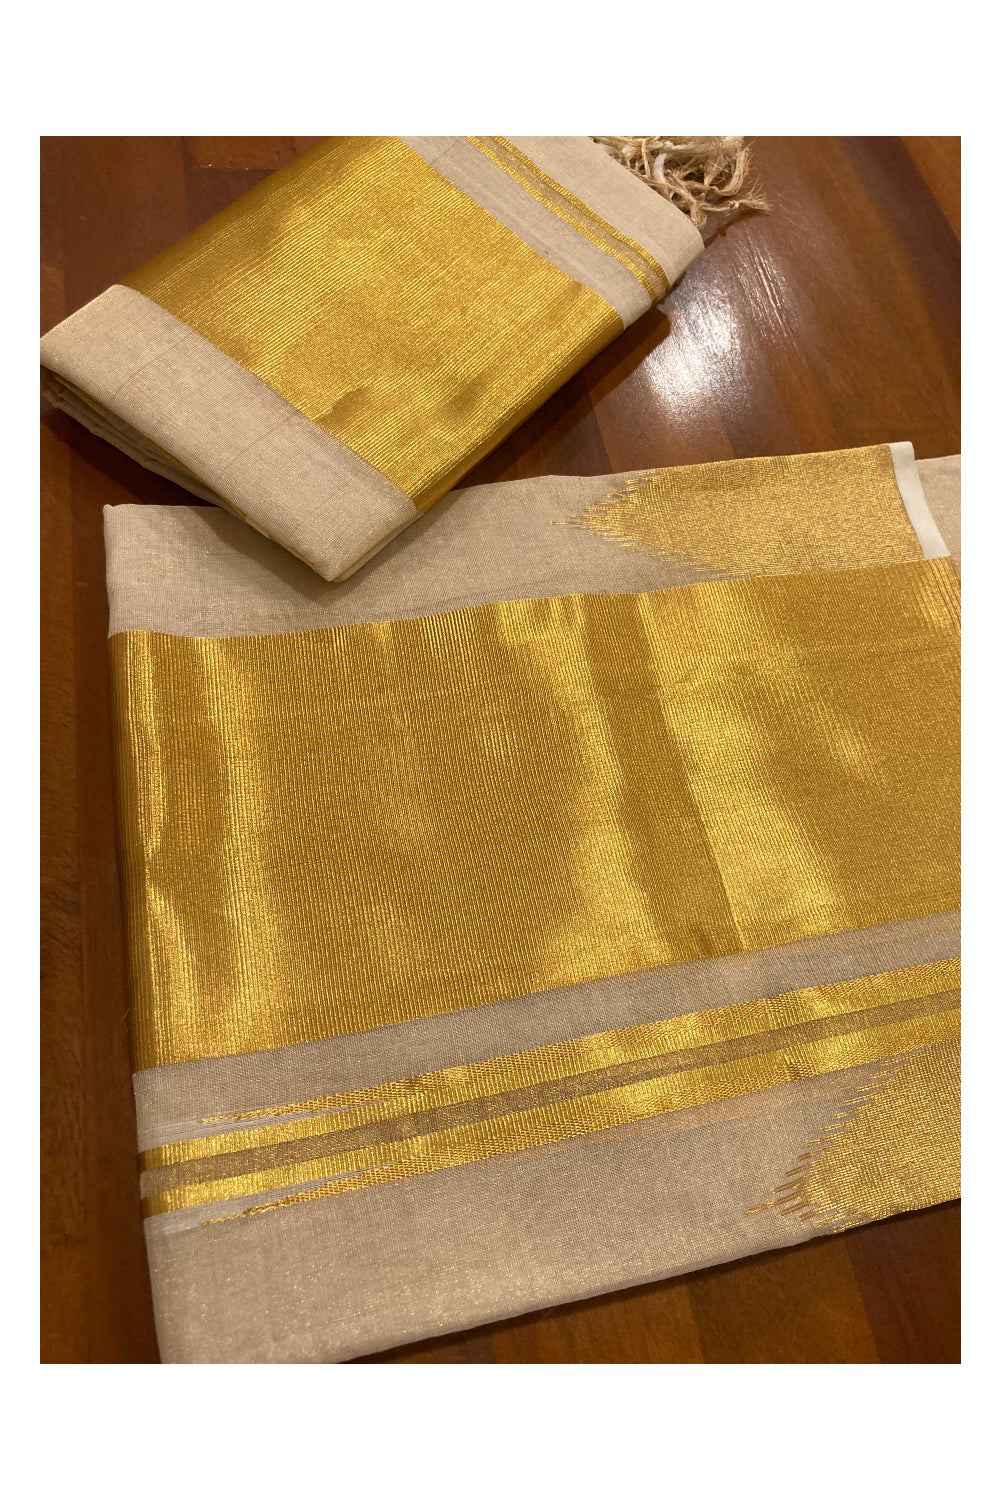 Southloom™ Handloom Tissue Kasavu Single Mundum Neriyathum (Set Mundu) with Temple work on Border